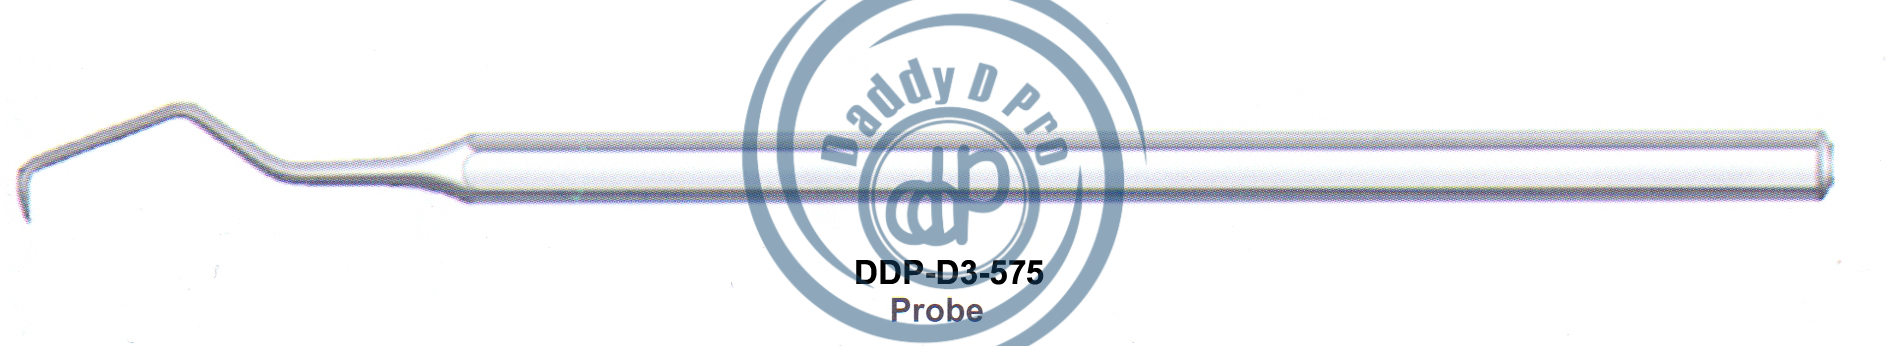 images/DDP-D3-575.png